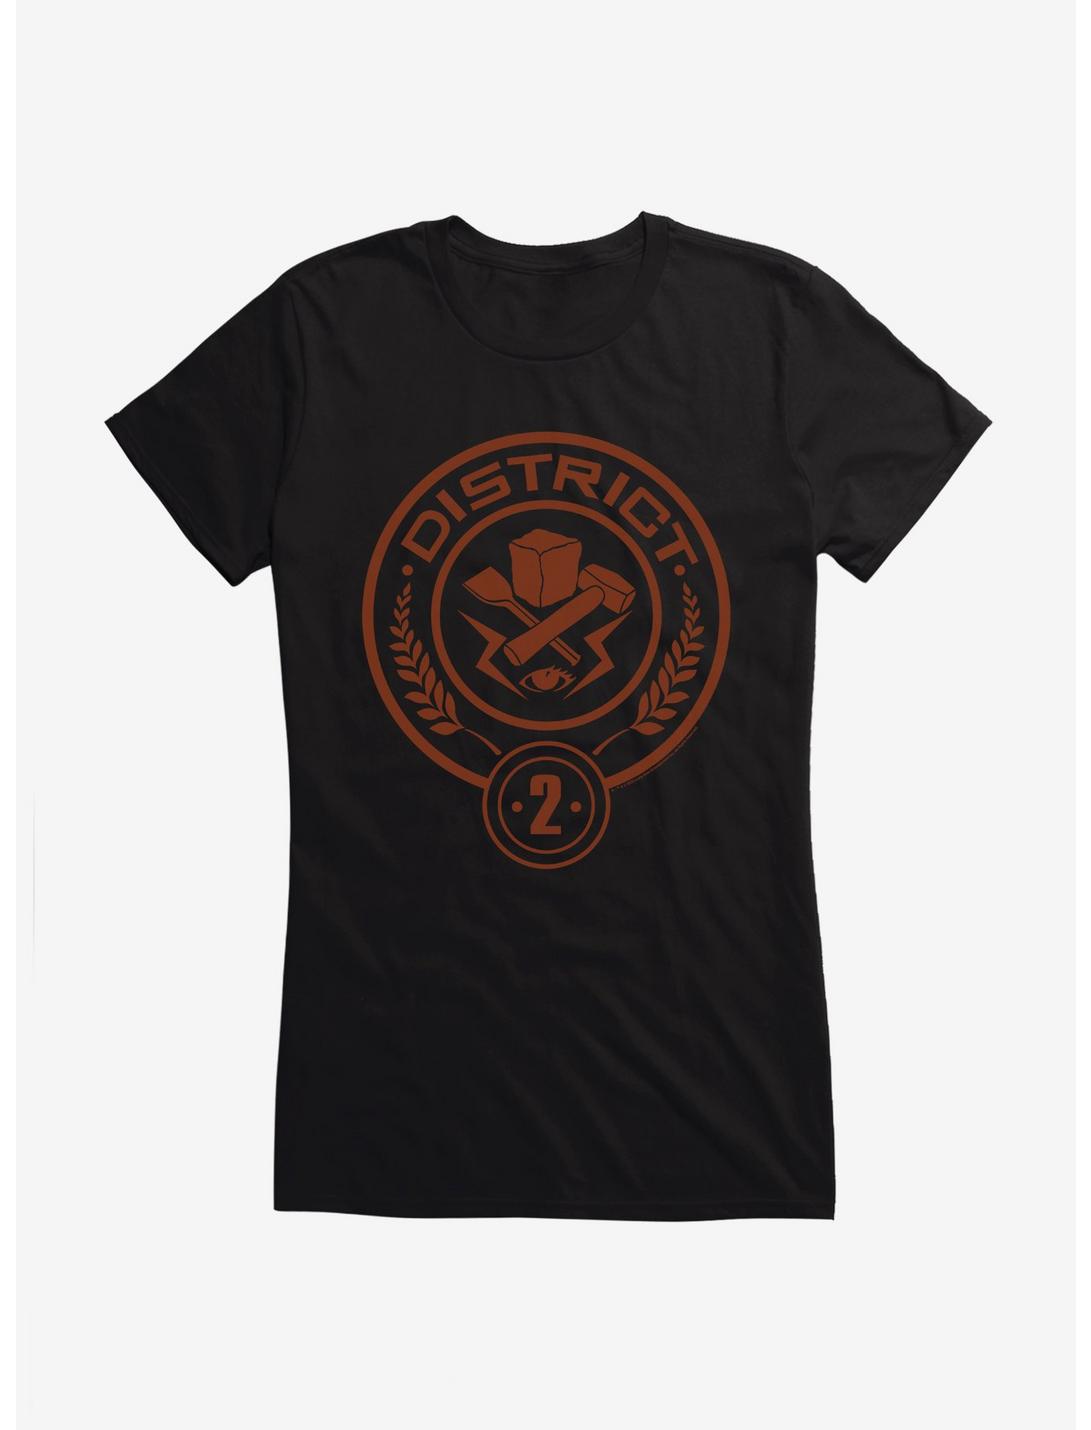 Hunger Games District 2 Logo Girls T-Shirt, BLACK, hi-res